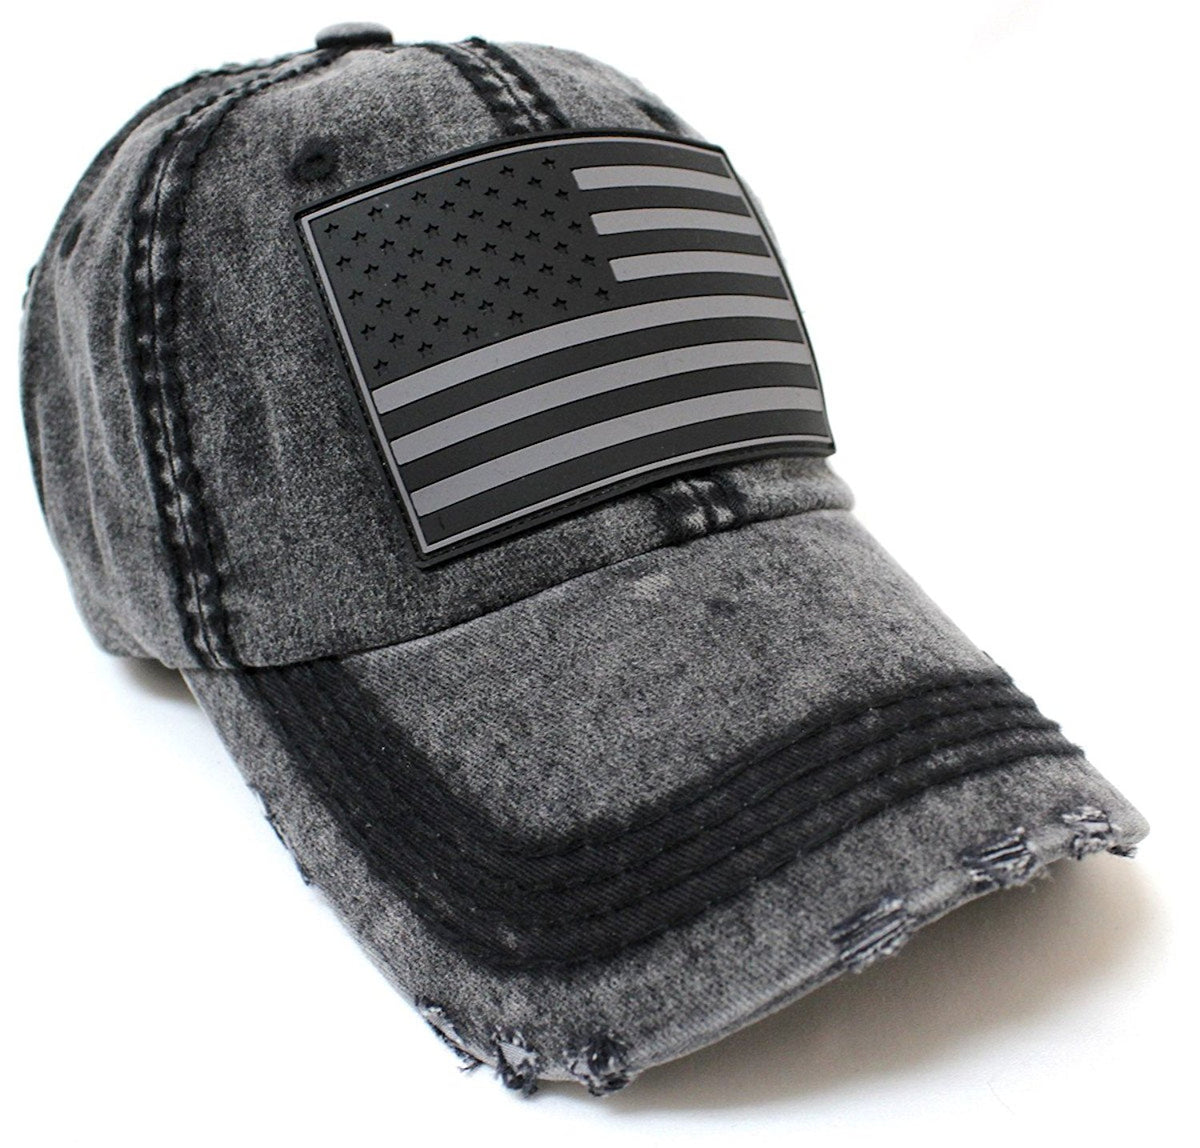 CAPS 'N VINTAGE Charcoal Grunge Grey USA Flag Vintage Ballcap - Caps 'N Vintage 